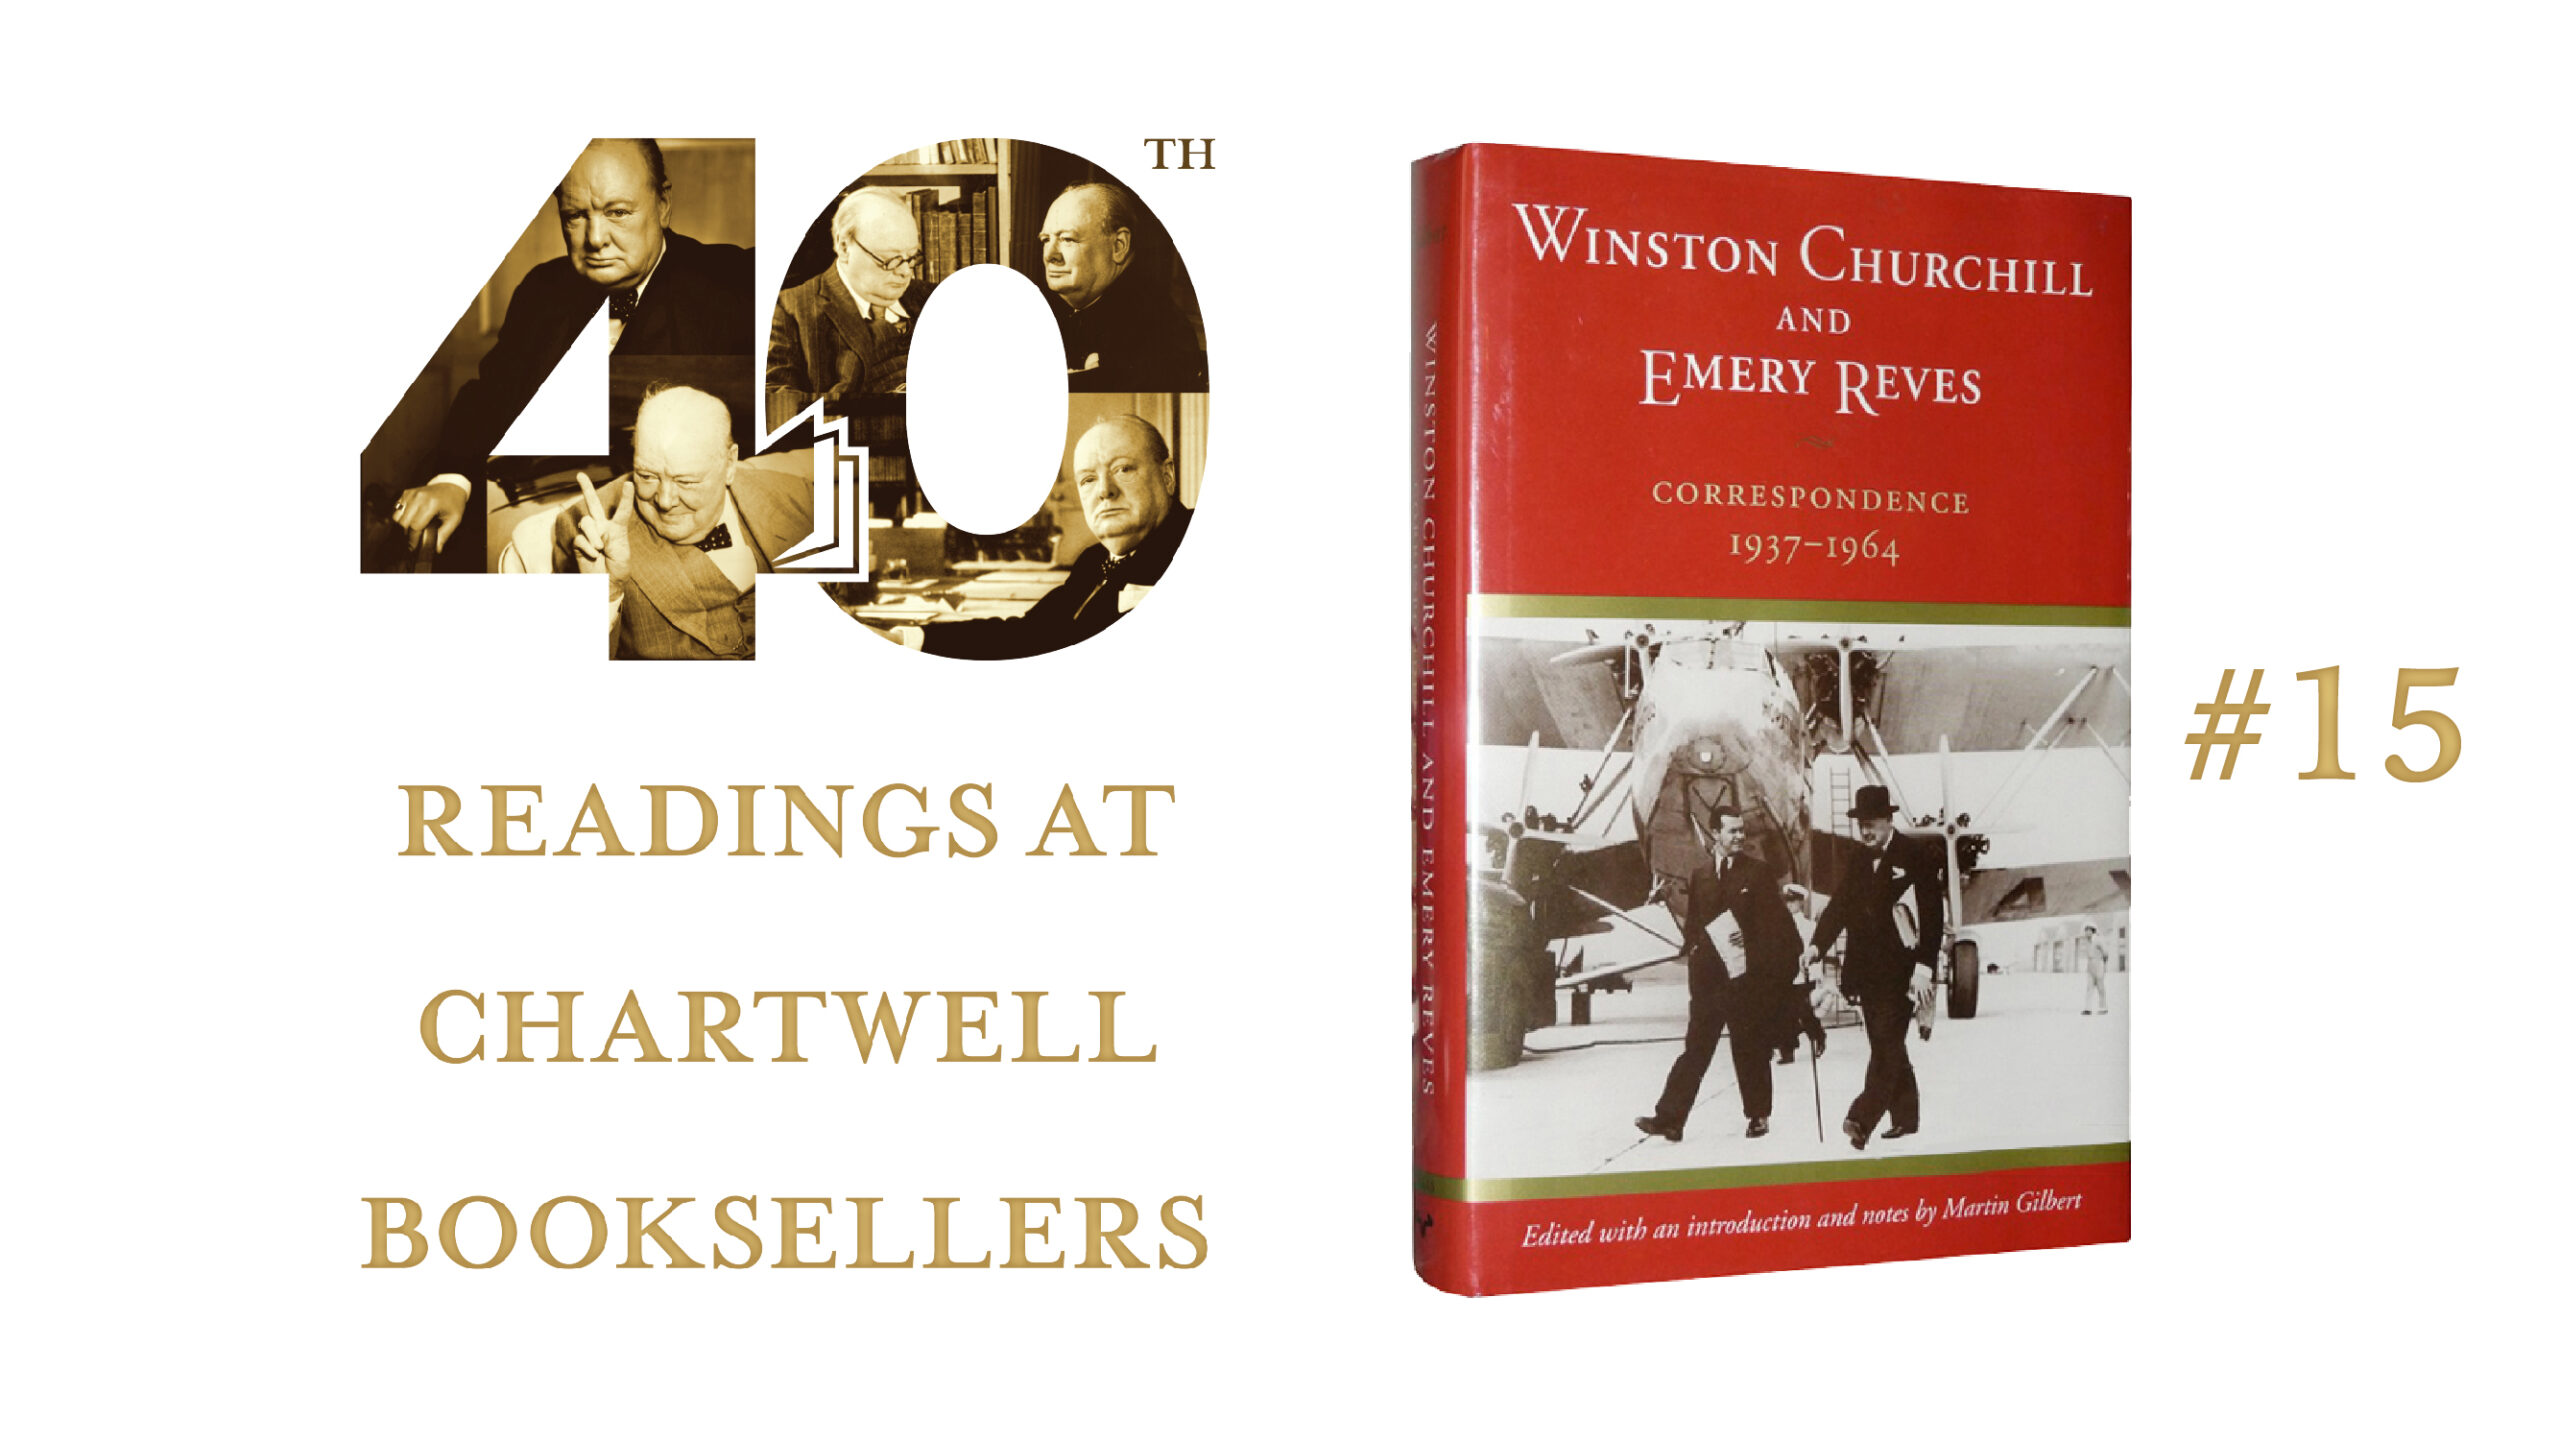 WATCH STEVEN WEBER READ “WINSTON CHURCHILL AND EMERY REVES CORRESPONDENCE, 1937-1964”